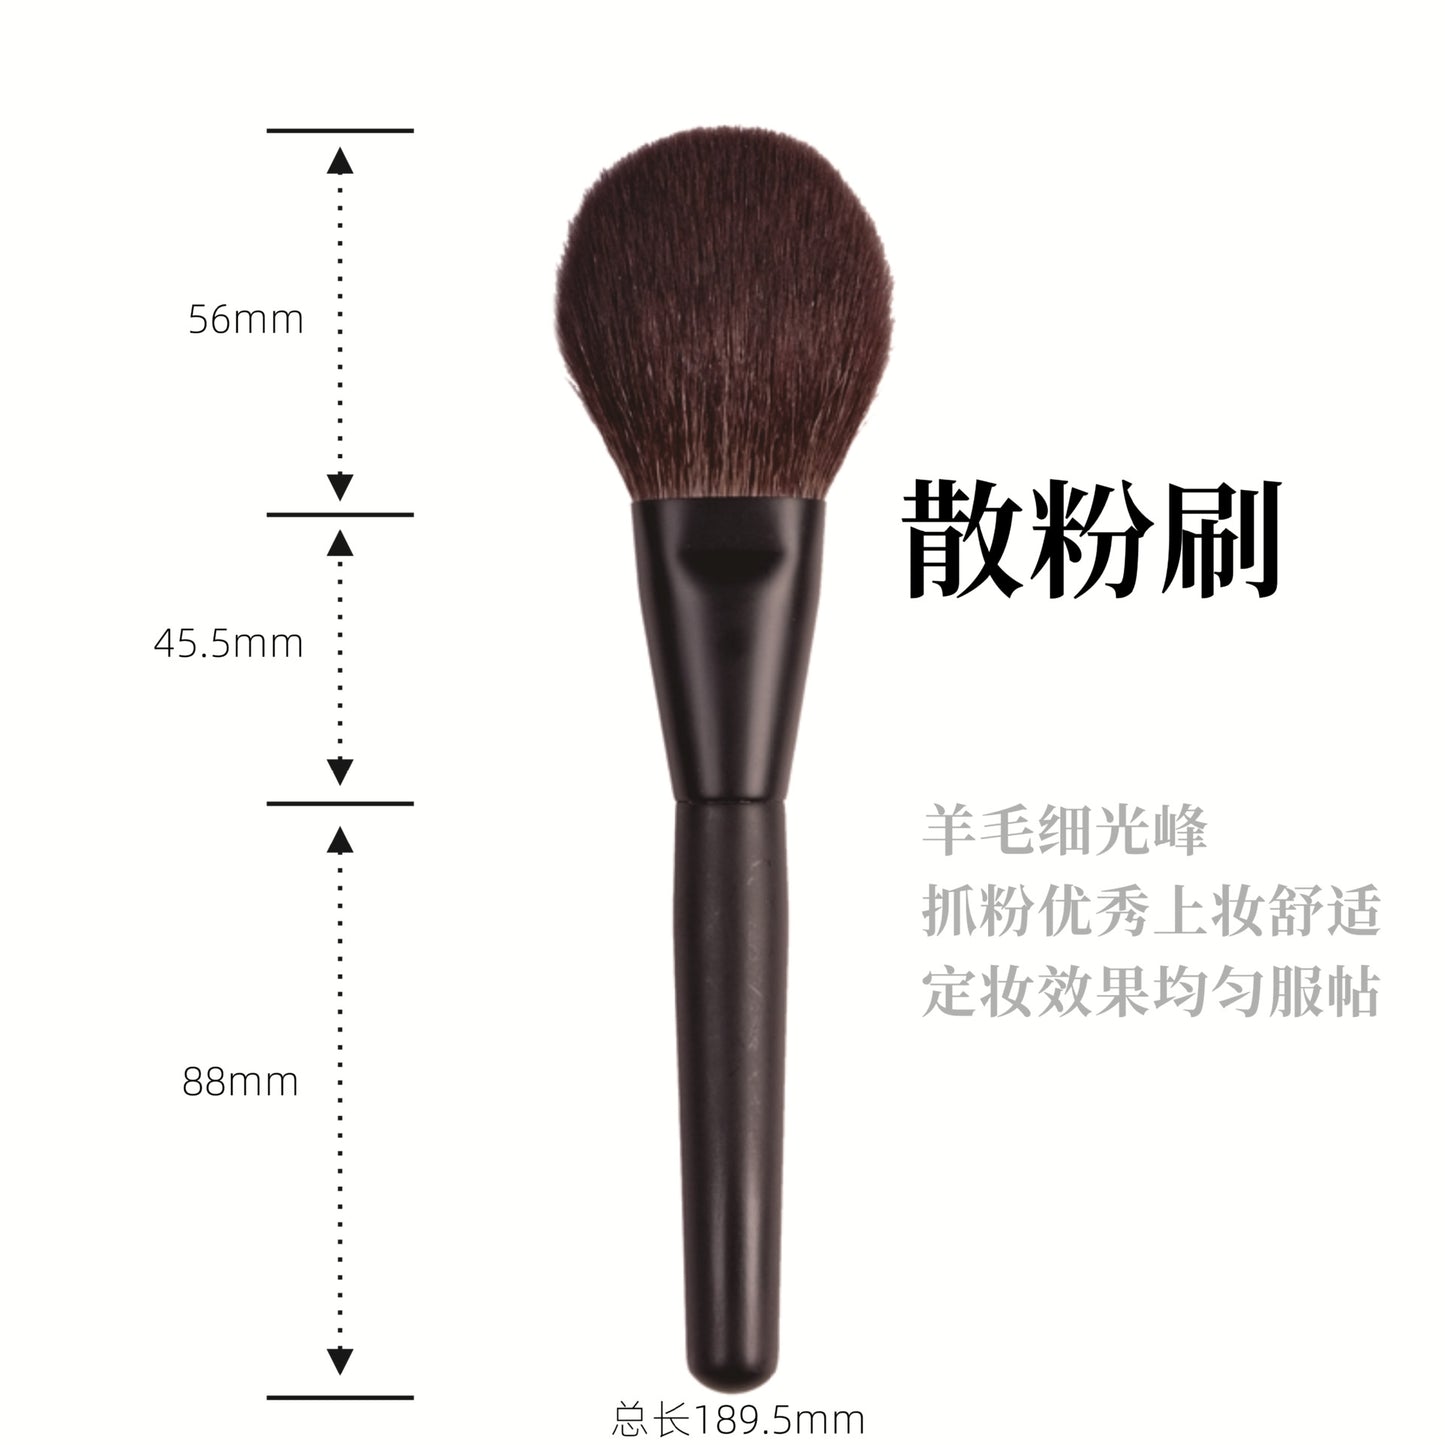 21 Sets Of Makeup Brushes Cangzhou Animal Hair Eye Shadow Powder Brush Foundation Blush Highlight Concealer Wooden Handle Beauty Brush